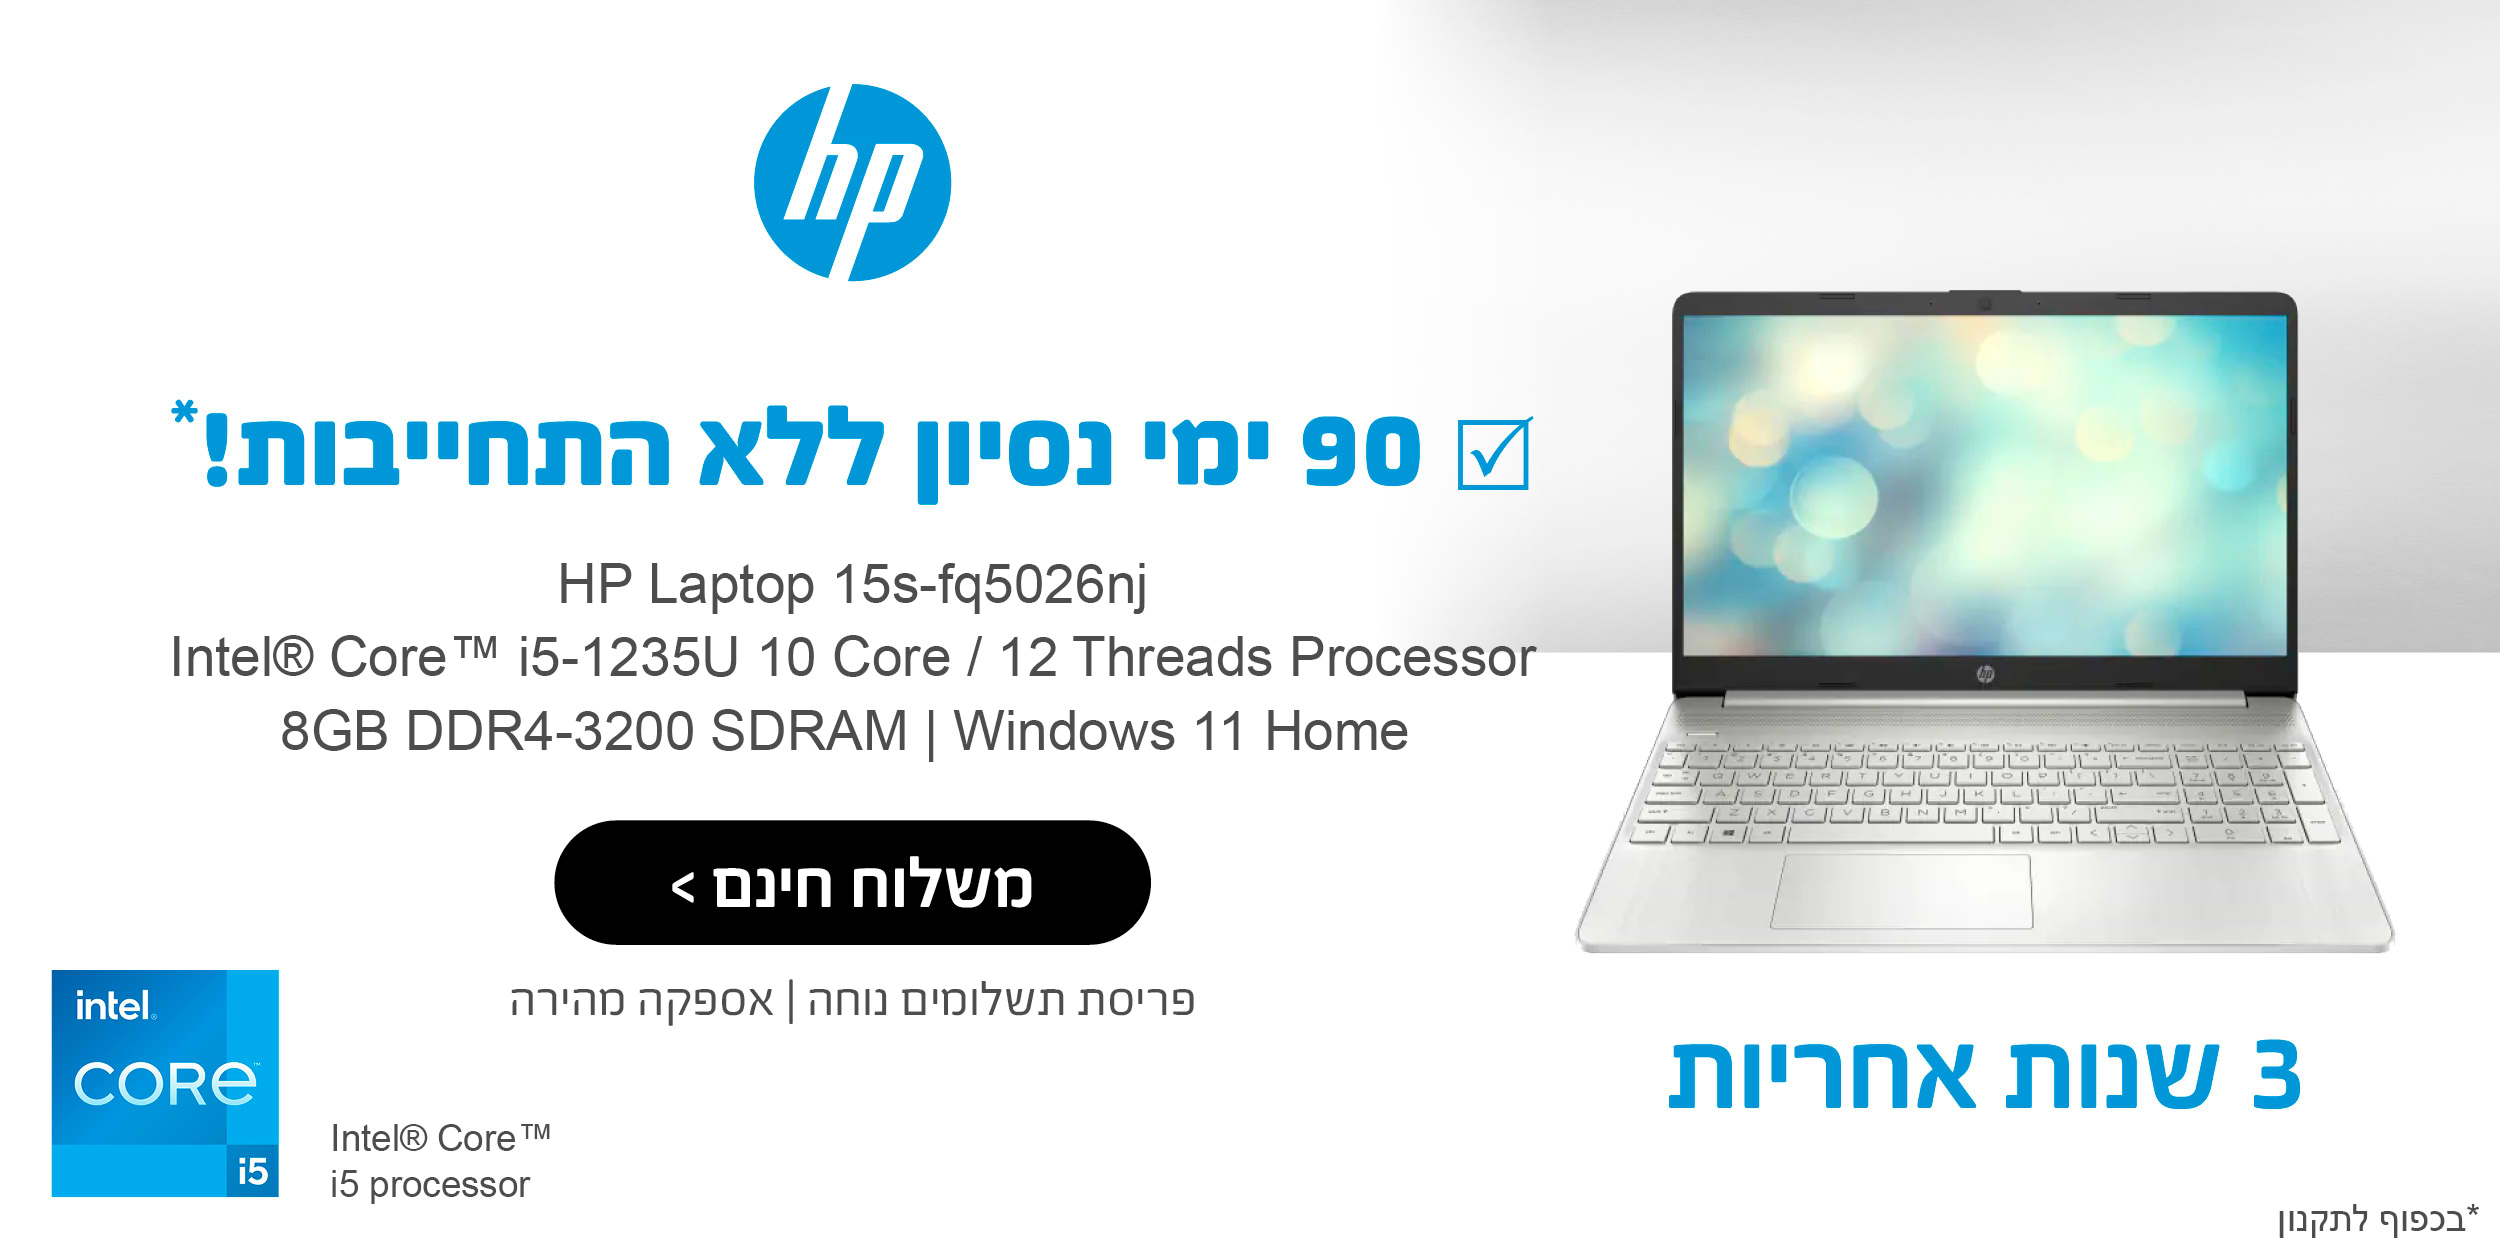 HP- 90 ימי ניסיון ללא התחייבות!* Hp laptop 15s-fq506nj | inter core i5-1235U 10 Core / 12 Threads Processor | 8GB DDR4-3200 SDRAM | Windows 11 Home - 3 שנות אחריות | משלוח חינם | פריסת תשלומים נוחה 